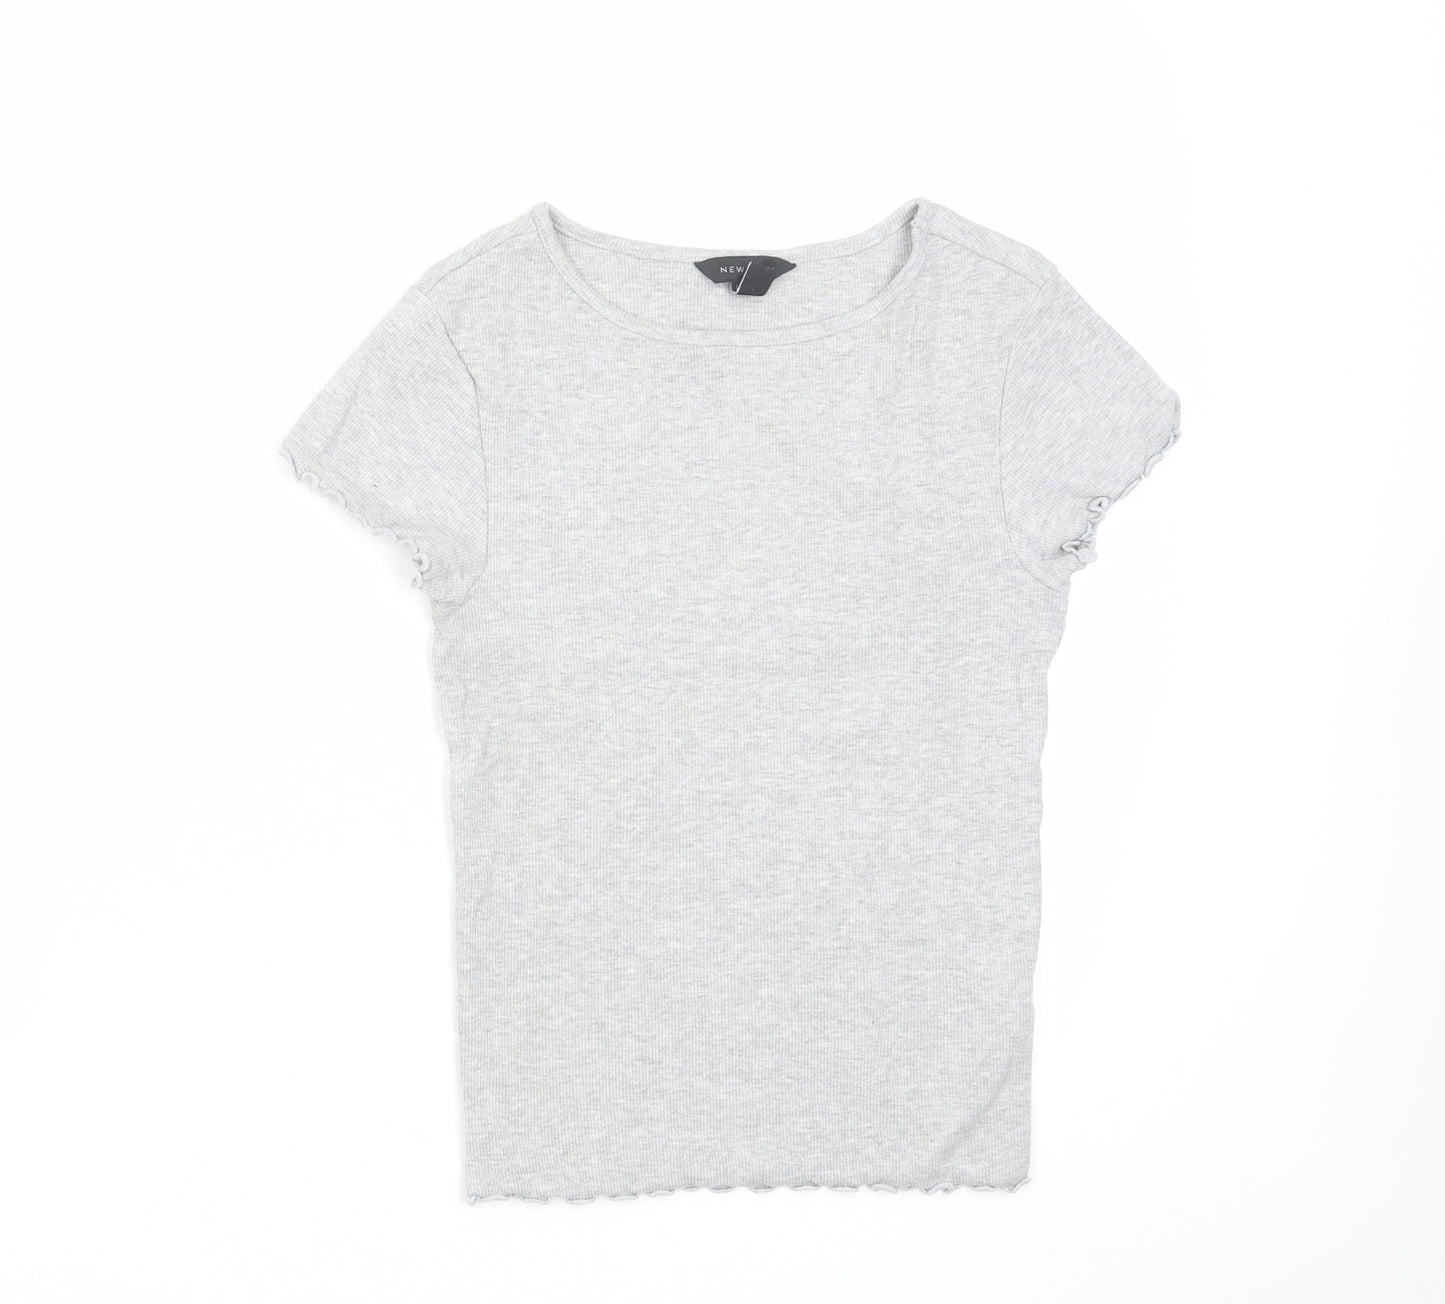 New Look Womens Grey Cotton Basic T-Shirt Size 10 Round Neck - Lettuce Hem